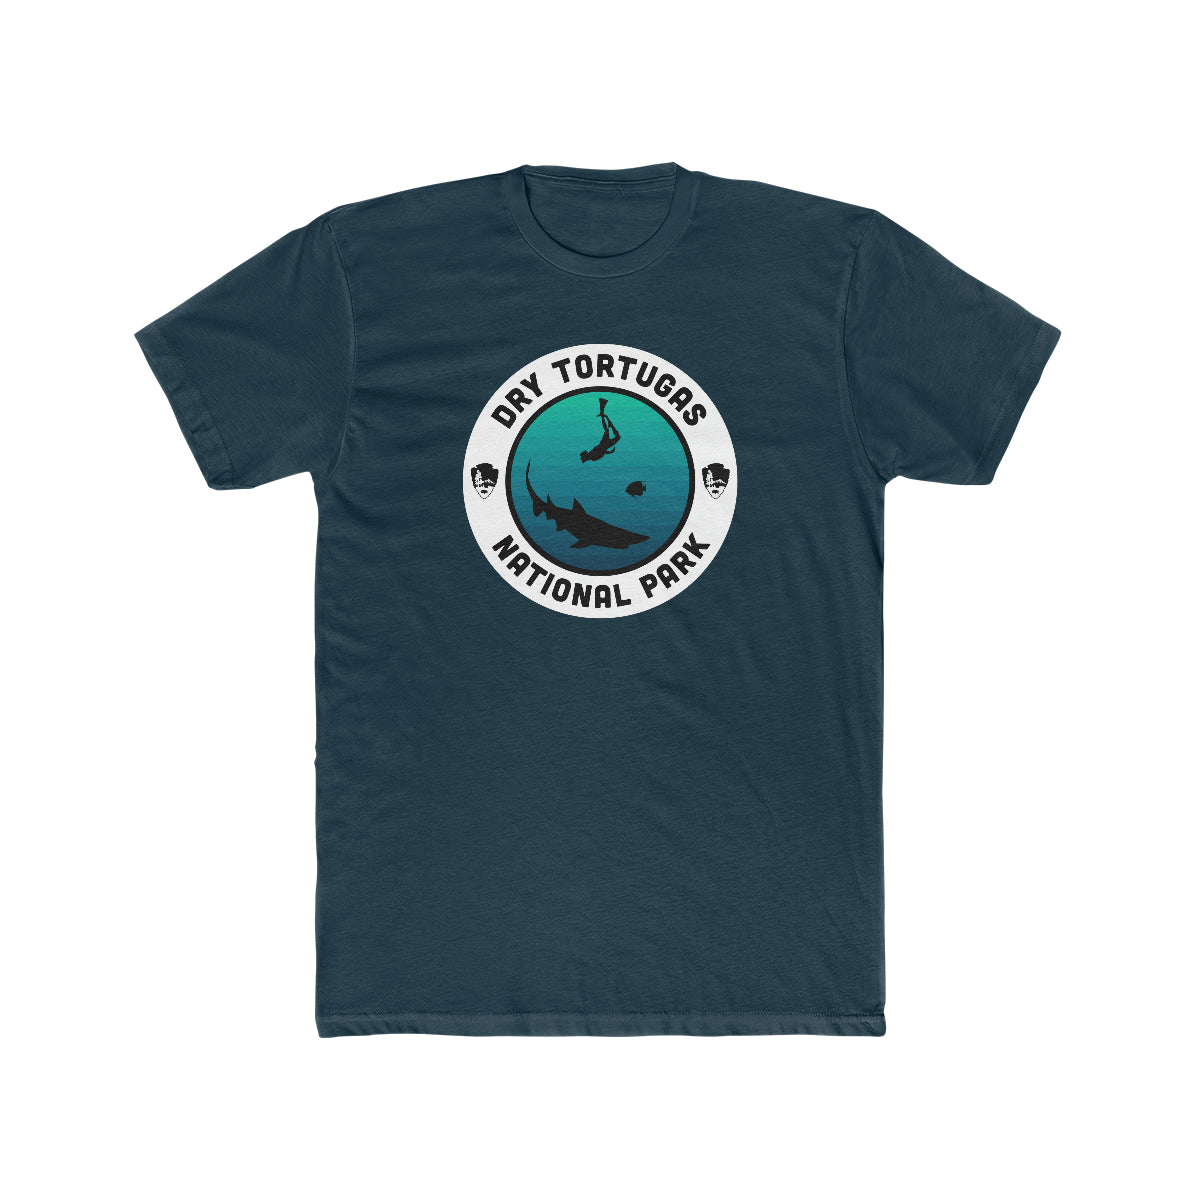 Dry Tortugas National Park T-Shirt - Round Badge Design